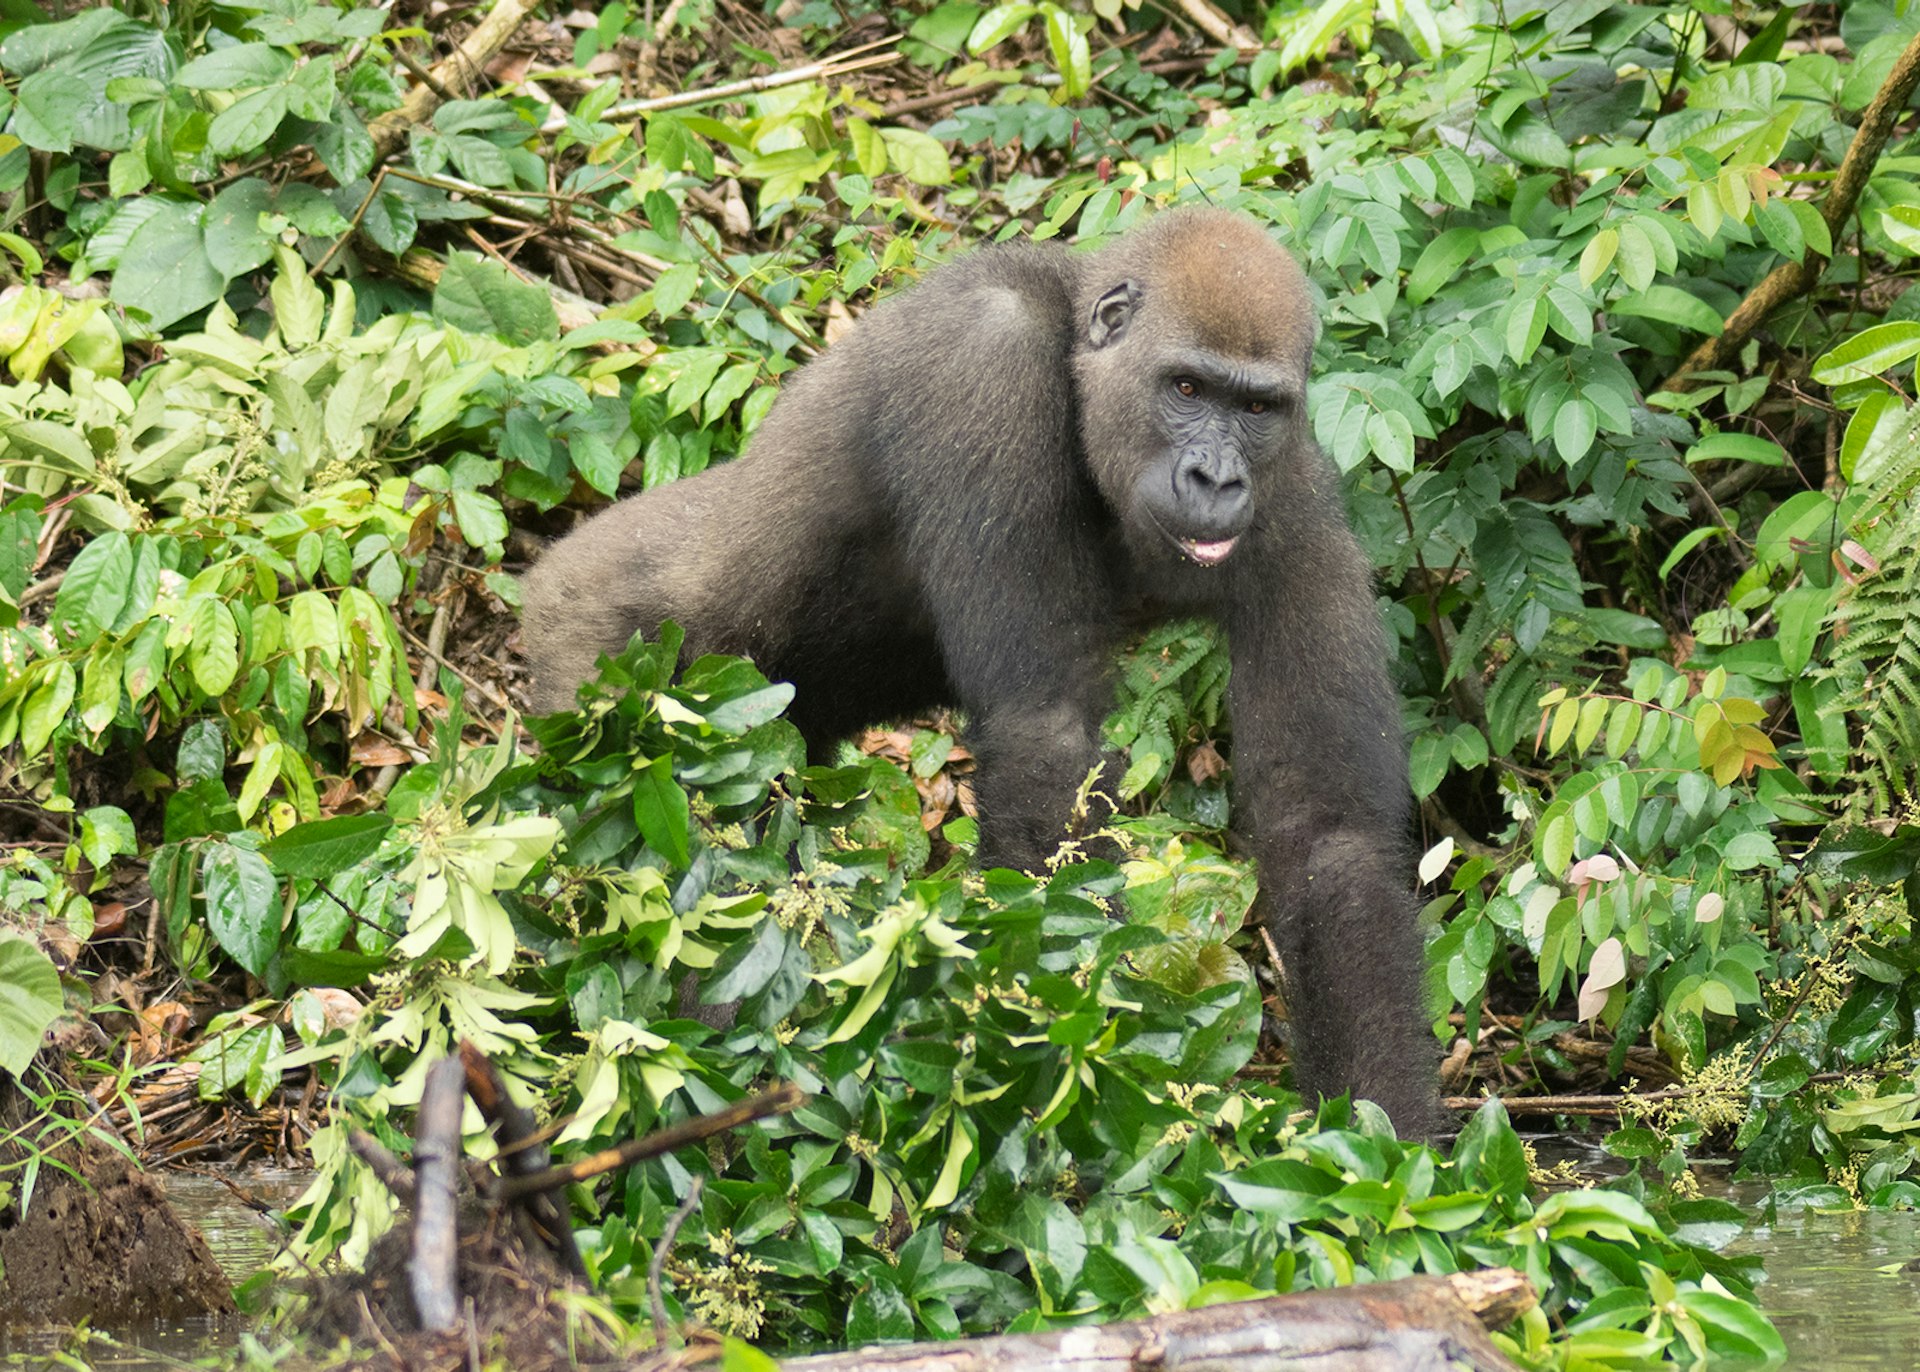 An endangered lowland gorilla in Gabon, Africa © Vaclav Sebek / Shutterstock